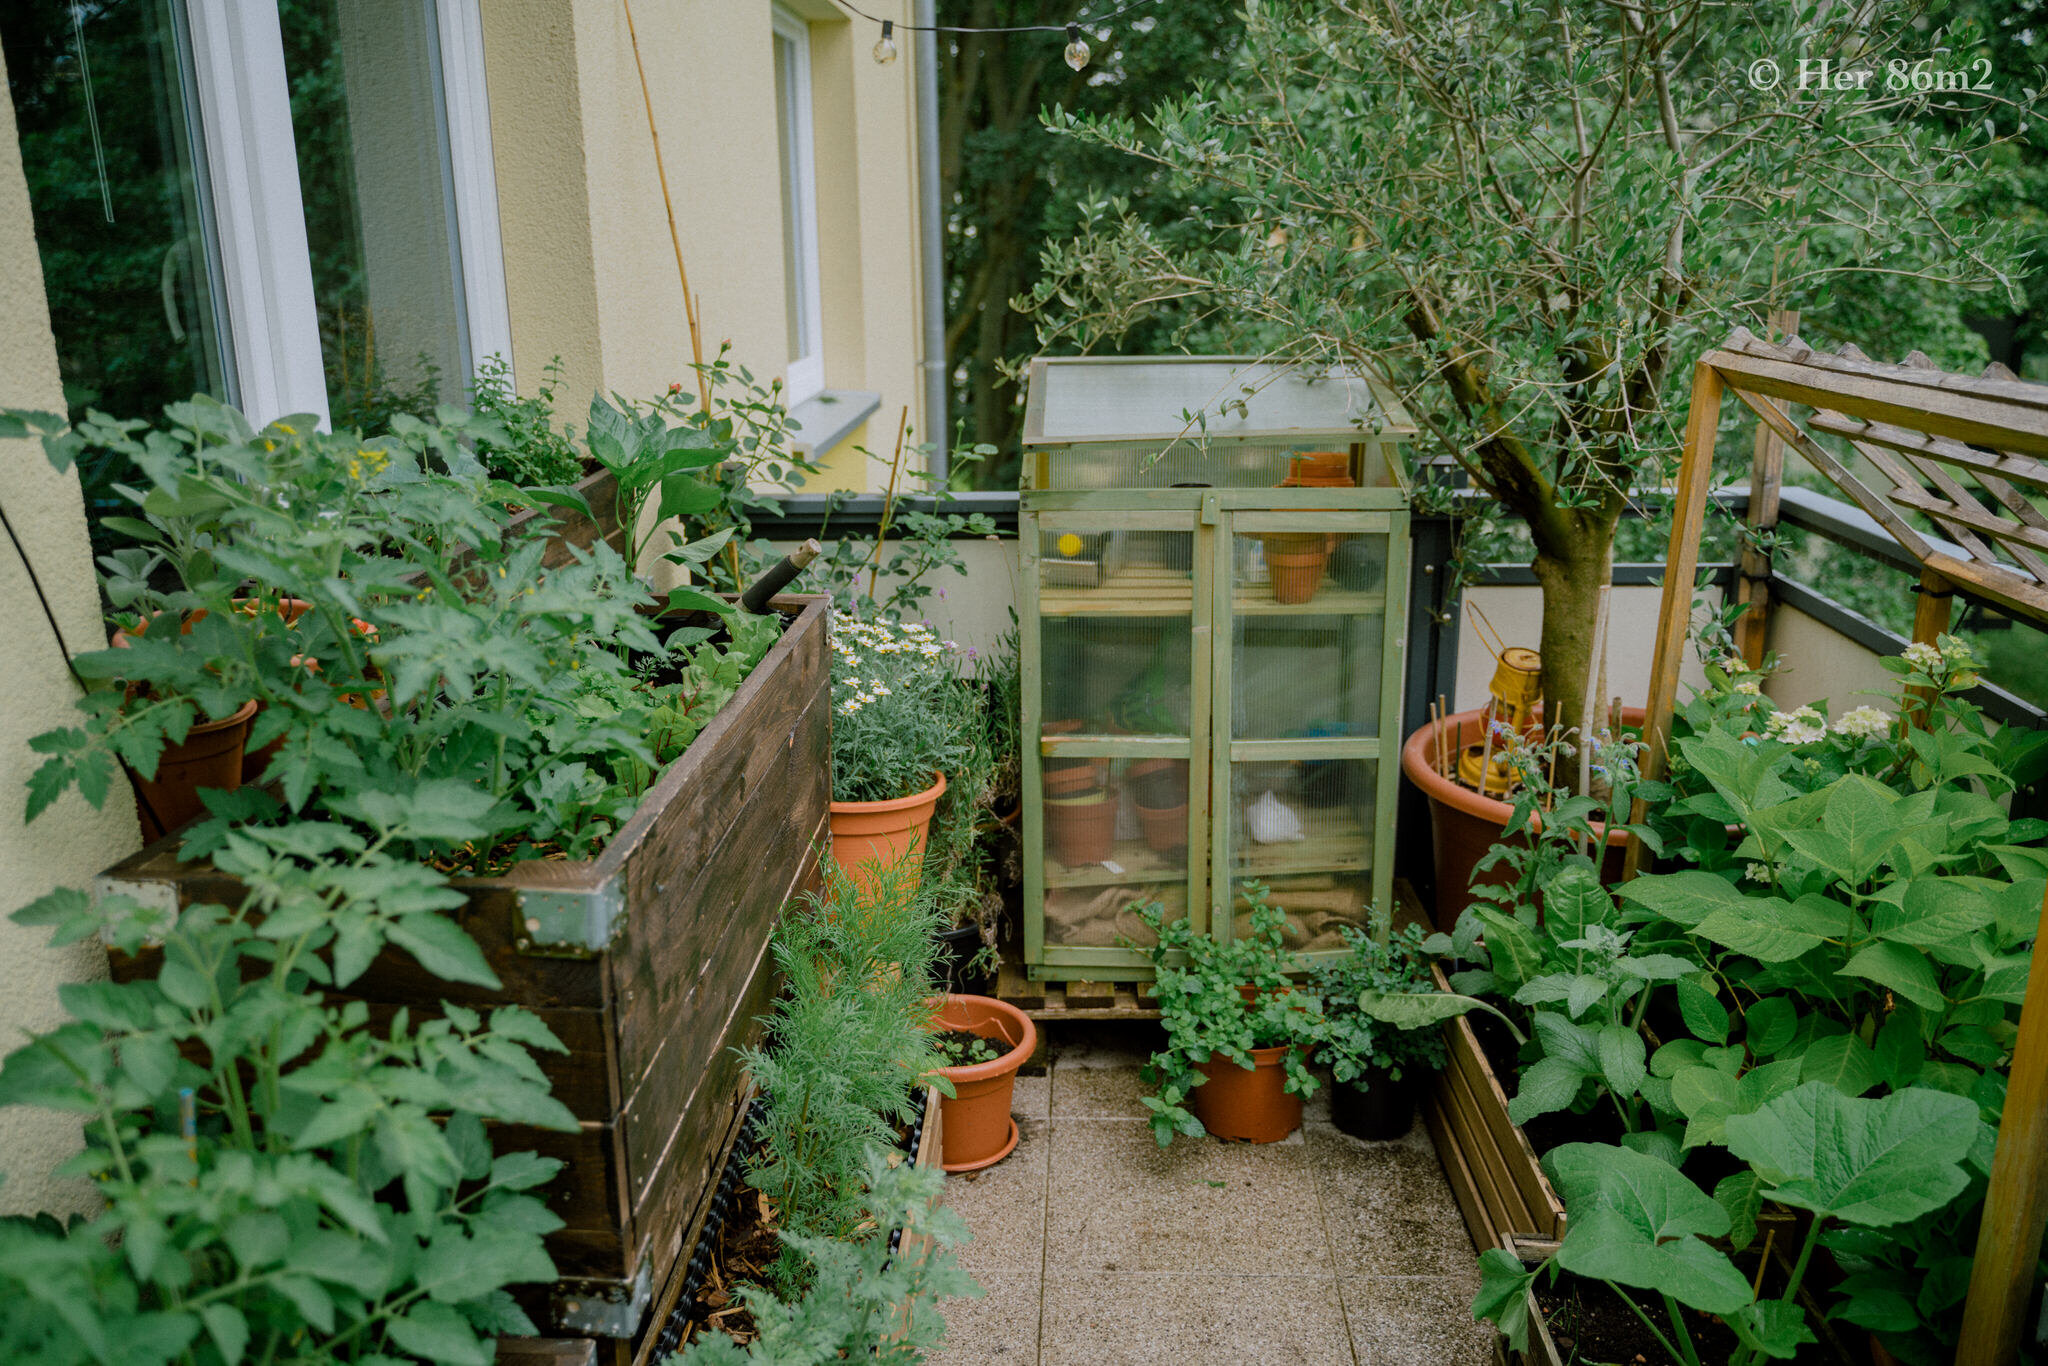 Her 86m2 - My 8m² Balcony Vegetable Garden | A Wonderful 200 Day Journey 135.jpg